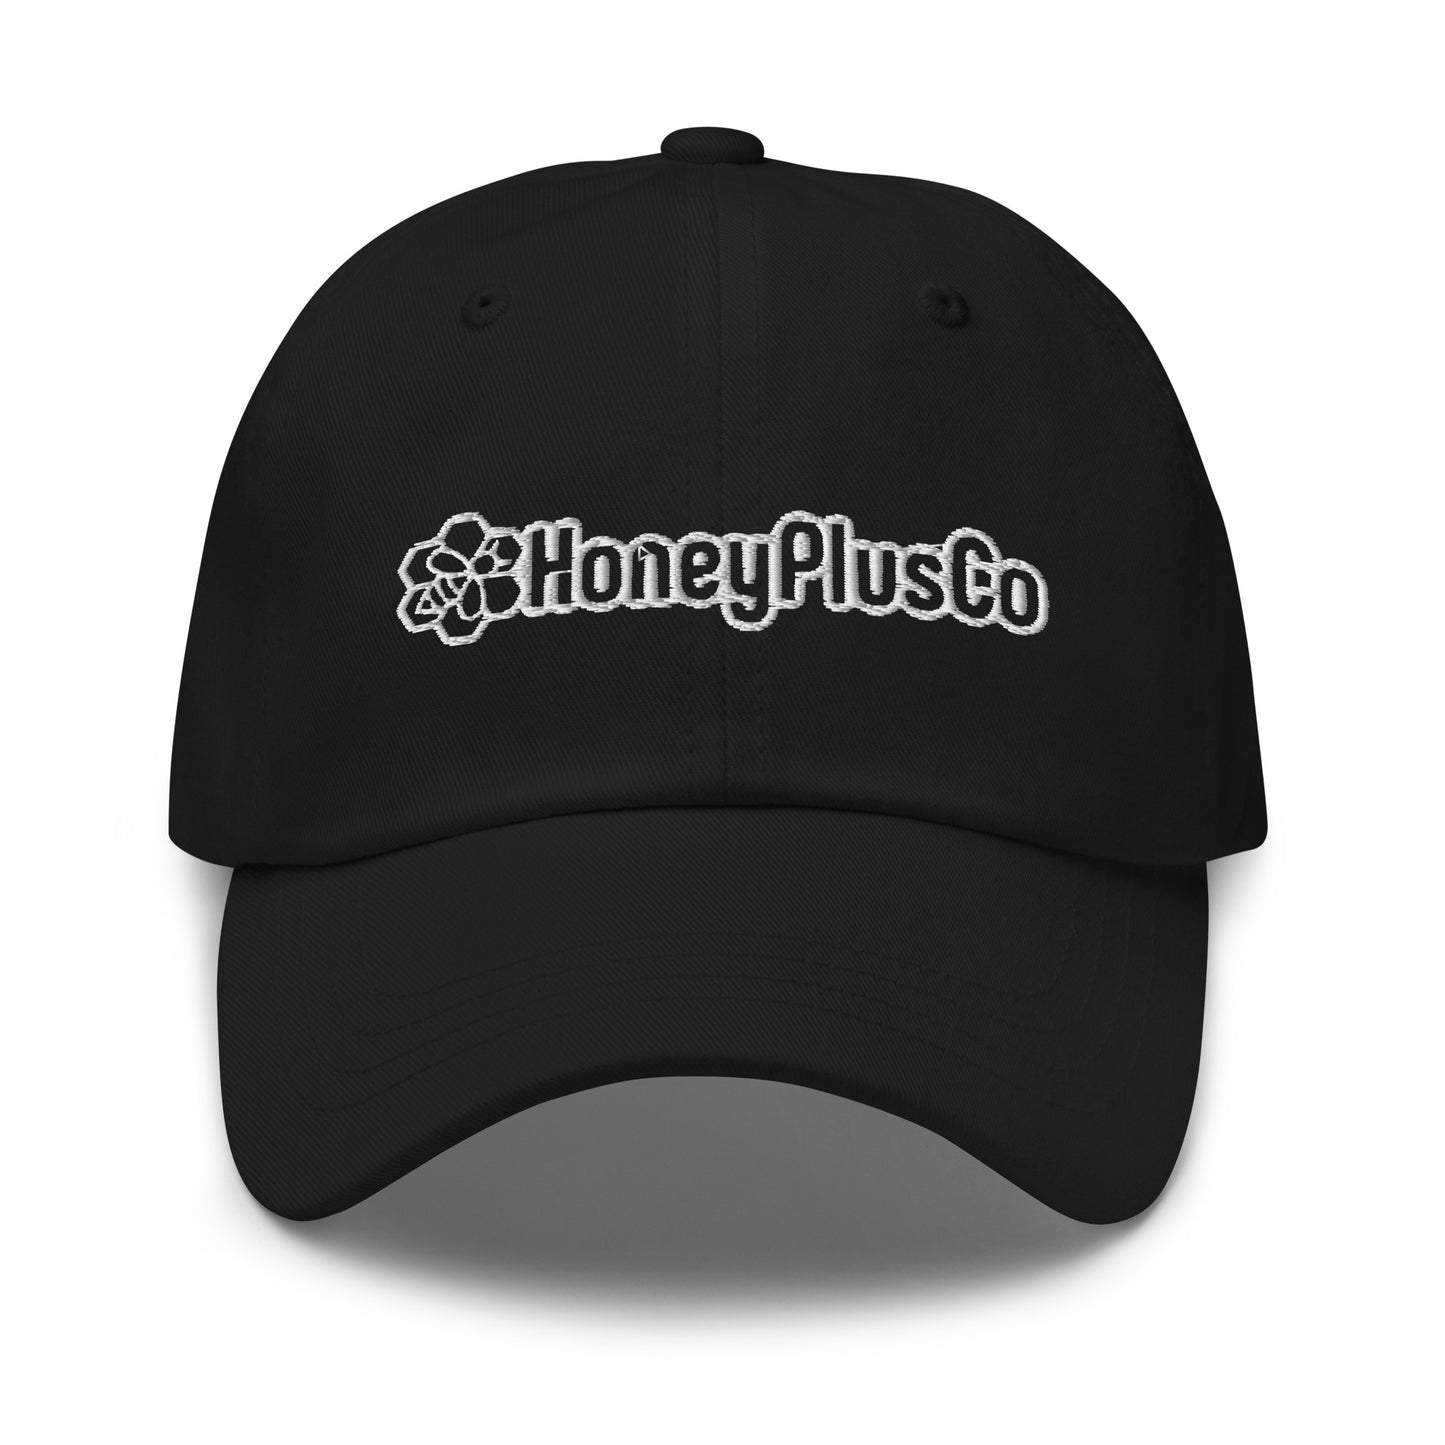 Honey Plus Co - Hat Style 1